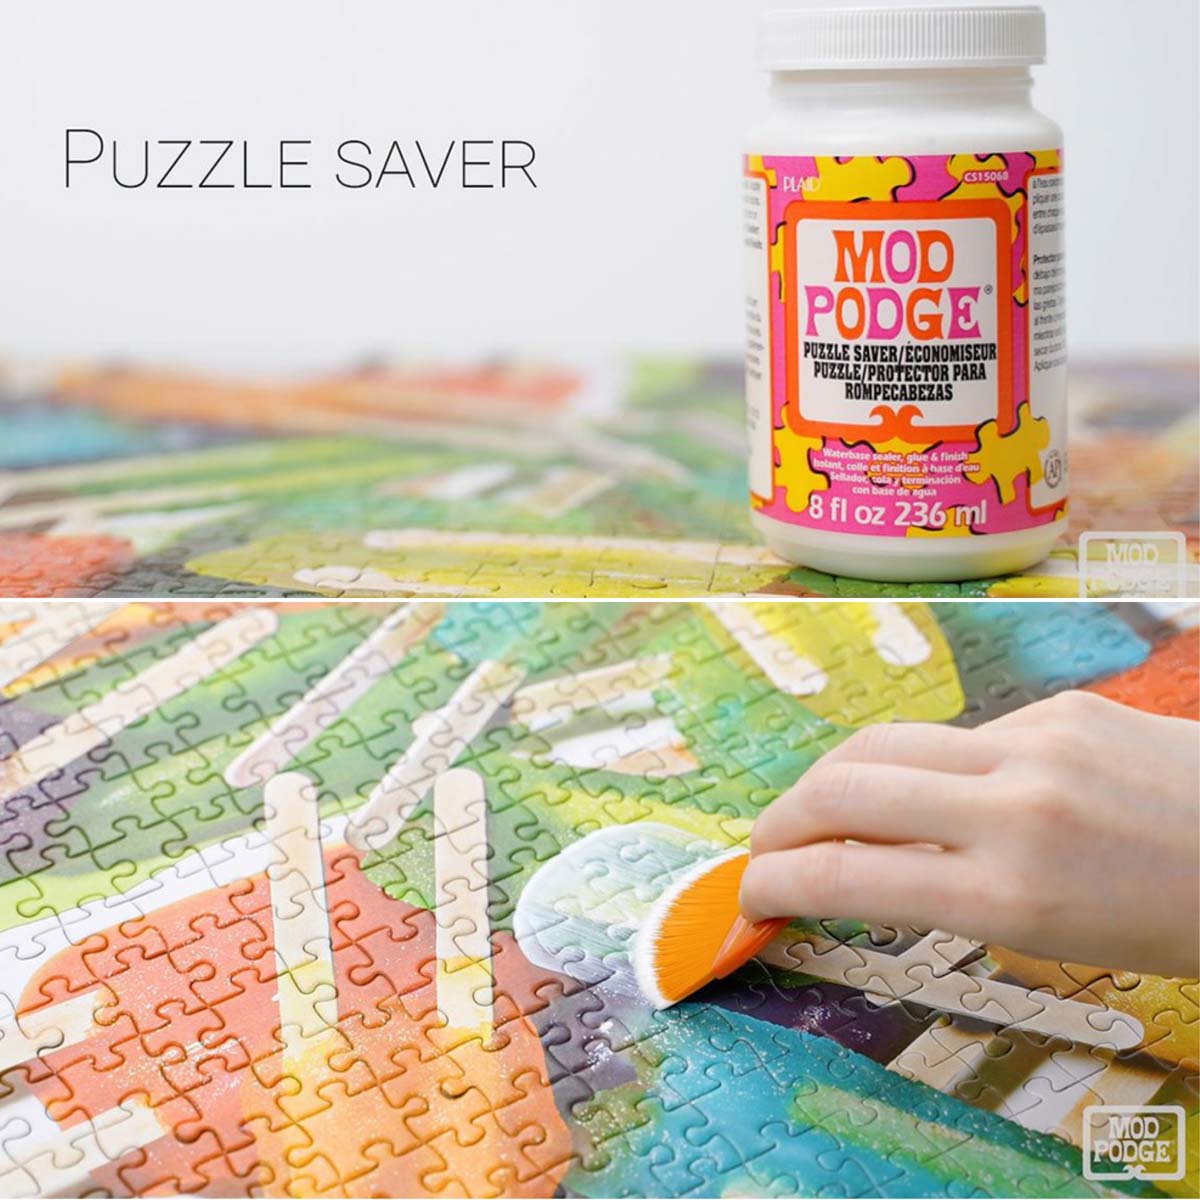 Mod Podge ® Puzzle Saver Gloss 8 oz. - CS15068